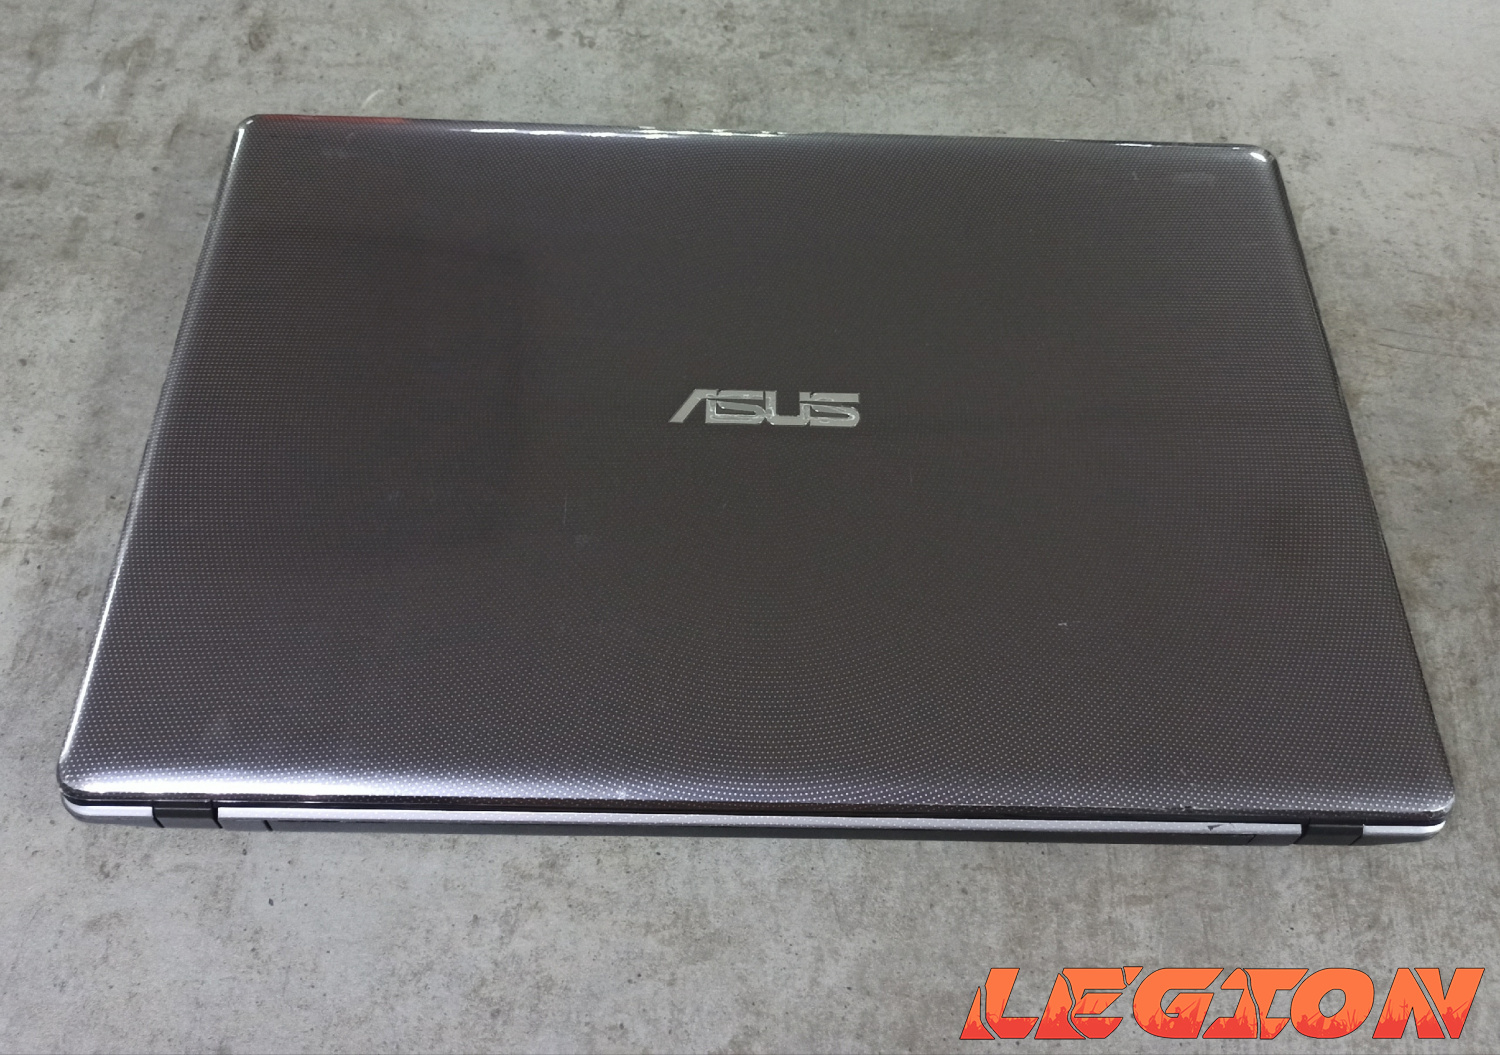 Asus i5 4200/8GB/GTX 950/320GB/15.6 FullHD